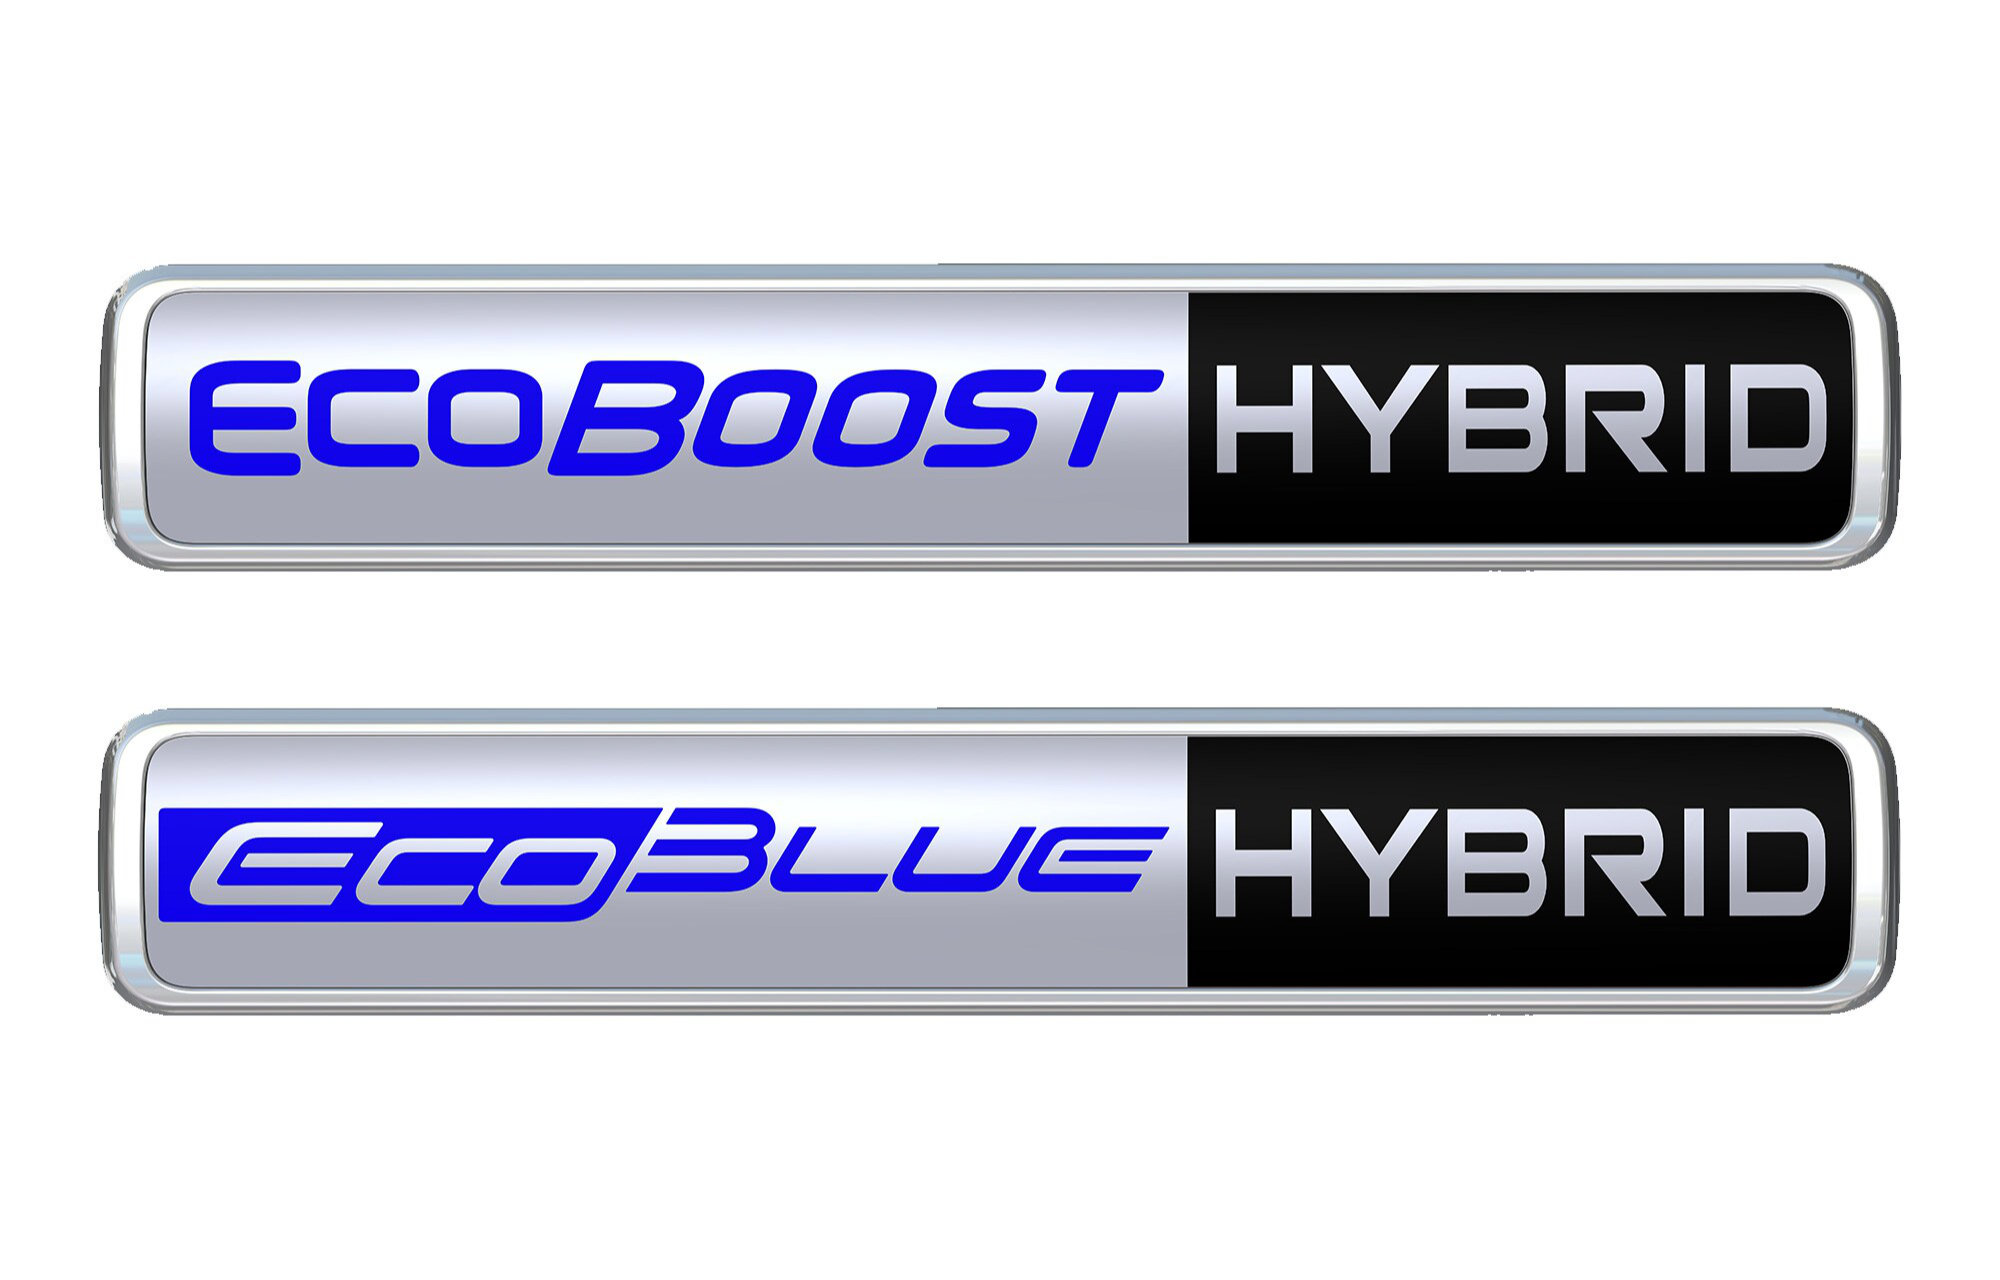 EcoBoost Hybrid motor